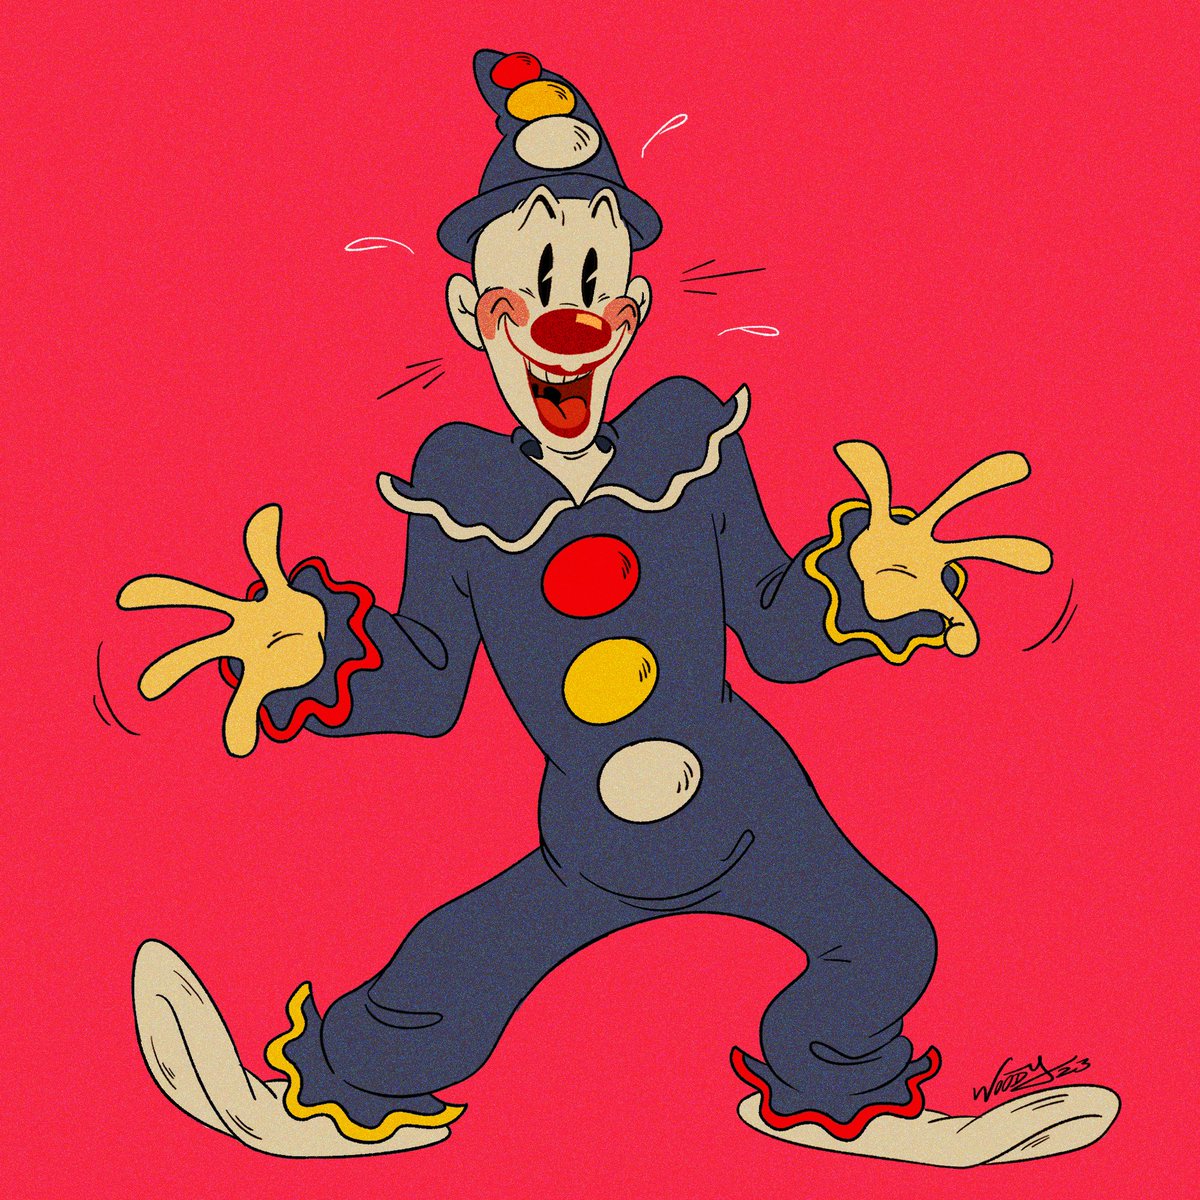 Koko the Clown! With and without color
#kokotheclown #bettyboop #maxfleischer #cartoon #classic #art #digital #rubberhose